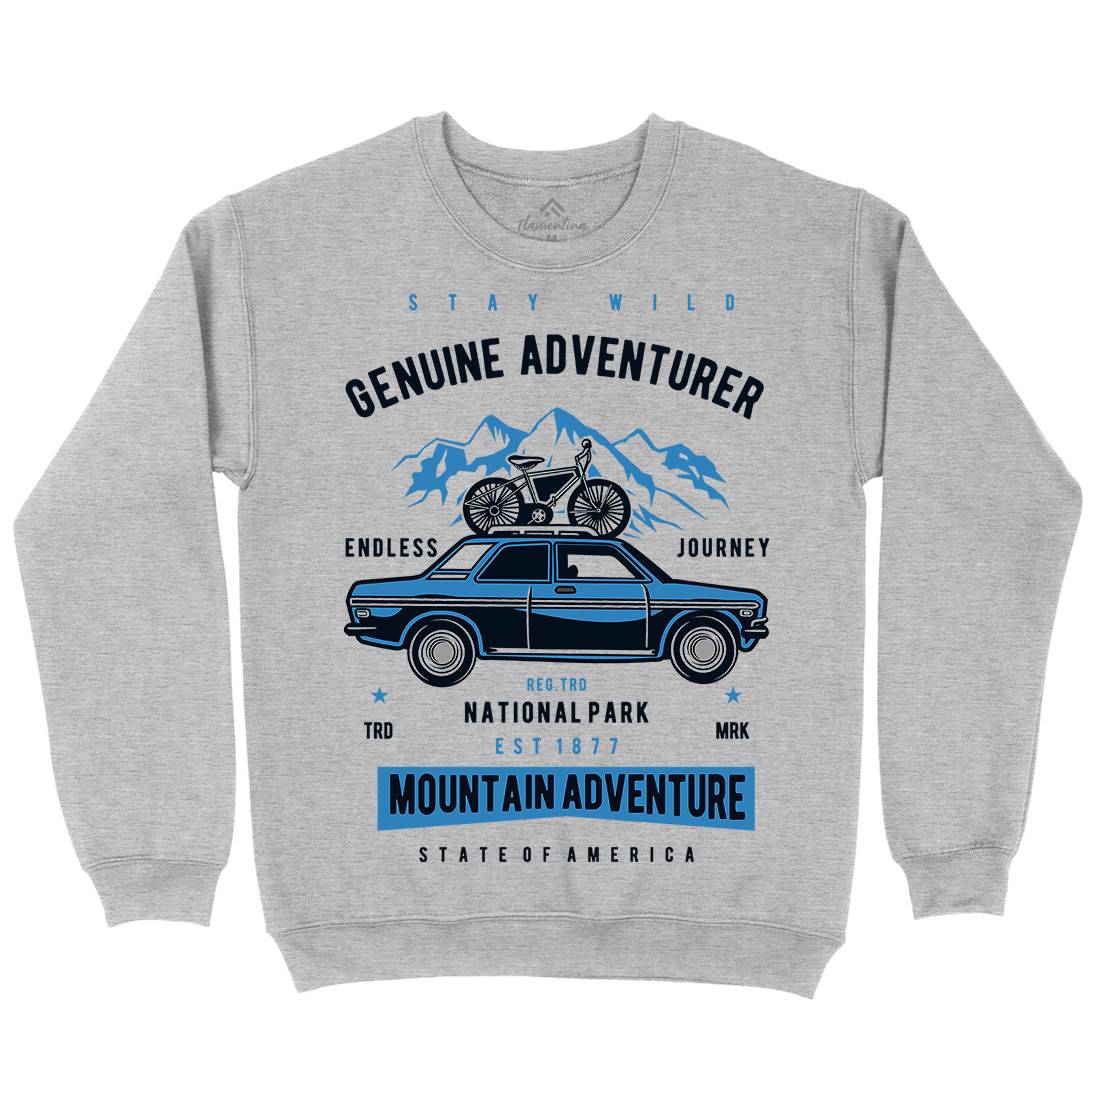 Genuine Adventurer Kids Crew Neck Sweatshirt Nature D539